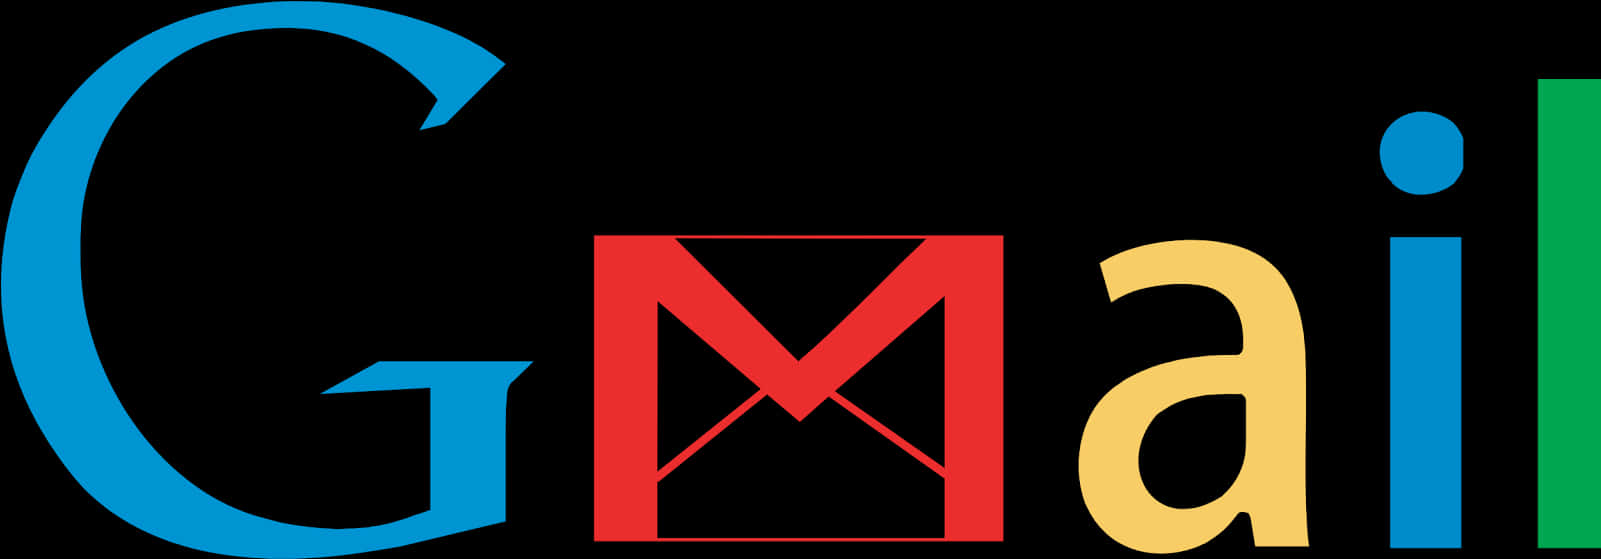 Gmail Logo Design PNG image